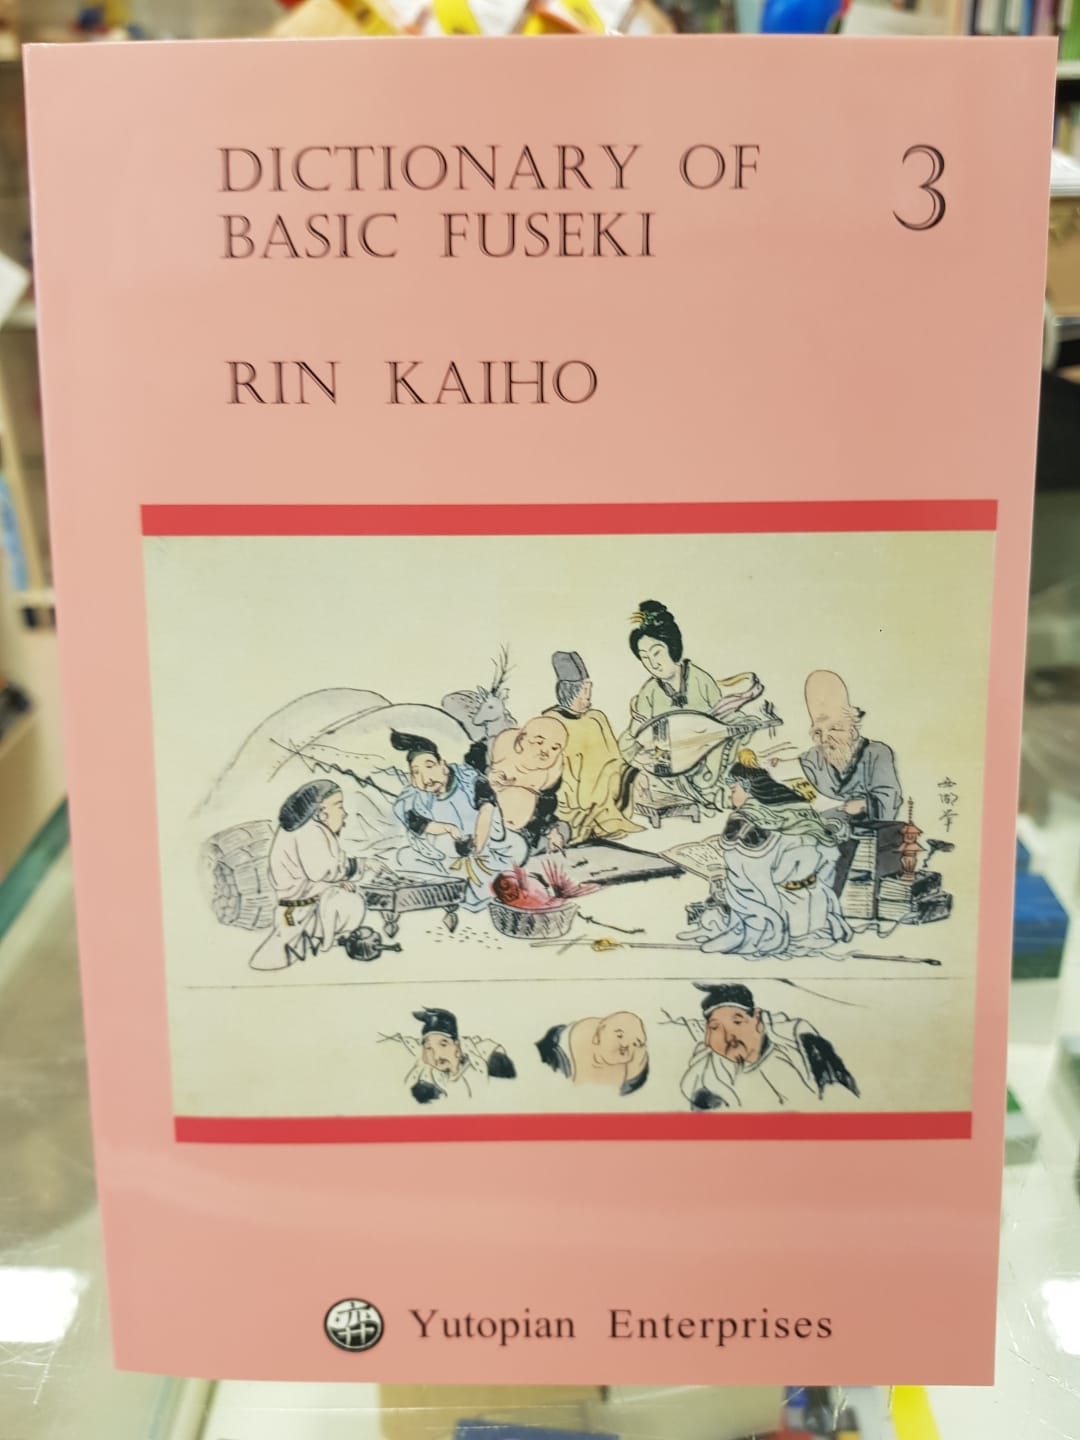 pay46Dictionary of basic fuseki, vol 3, Rin Kaiho